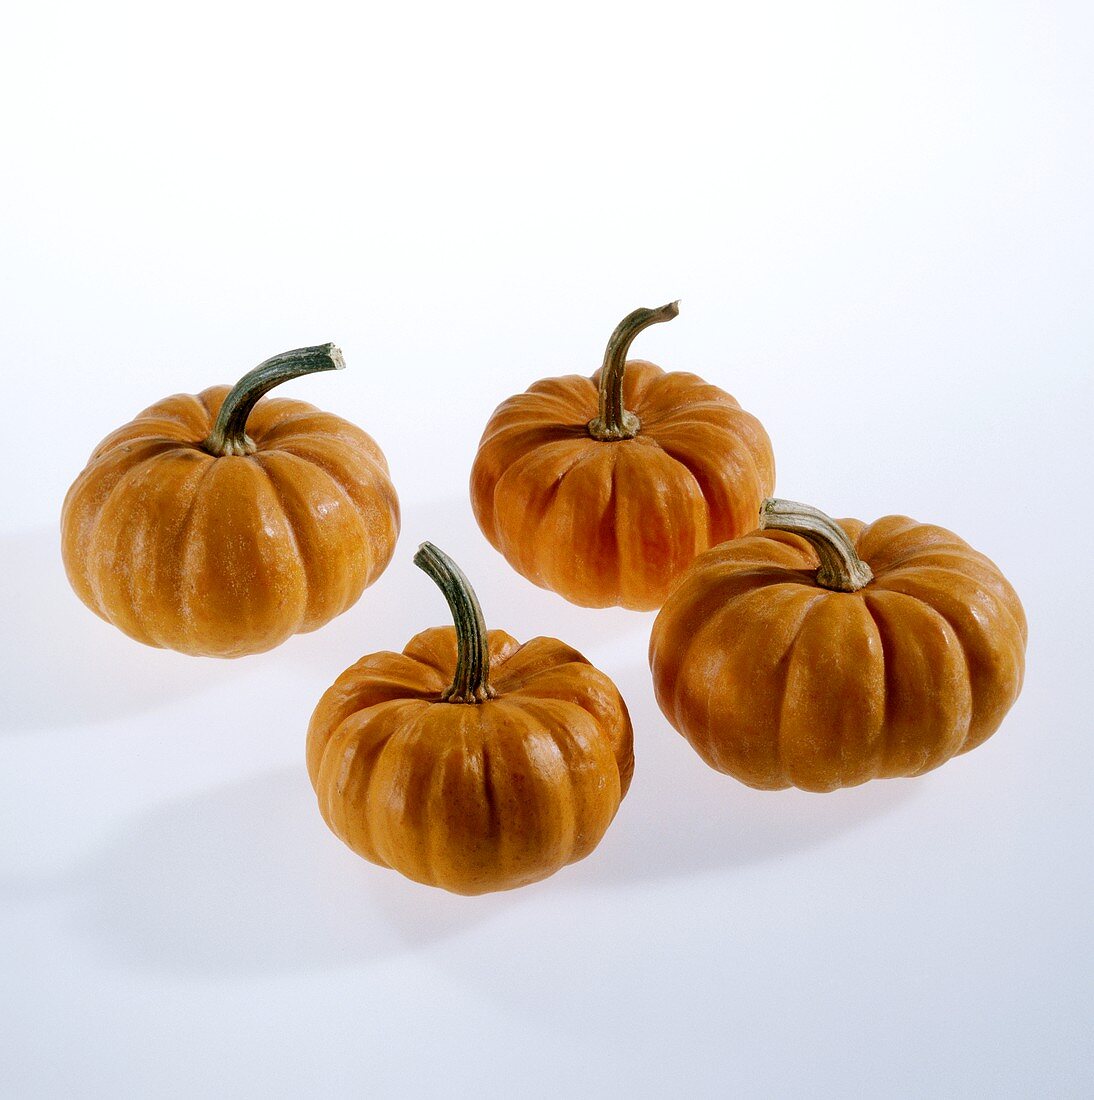 Four pumpkins (Jack be little or Mandarin)